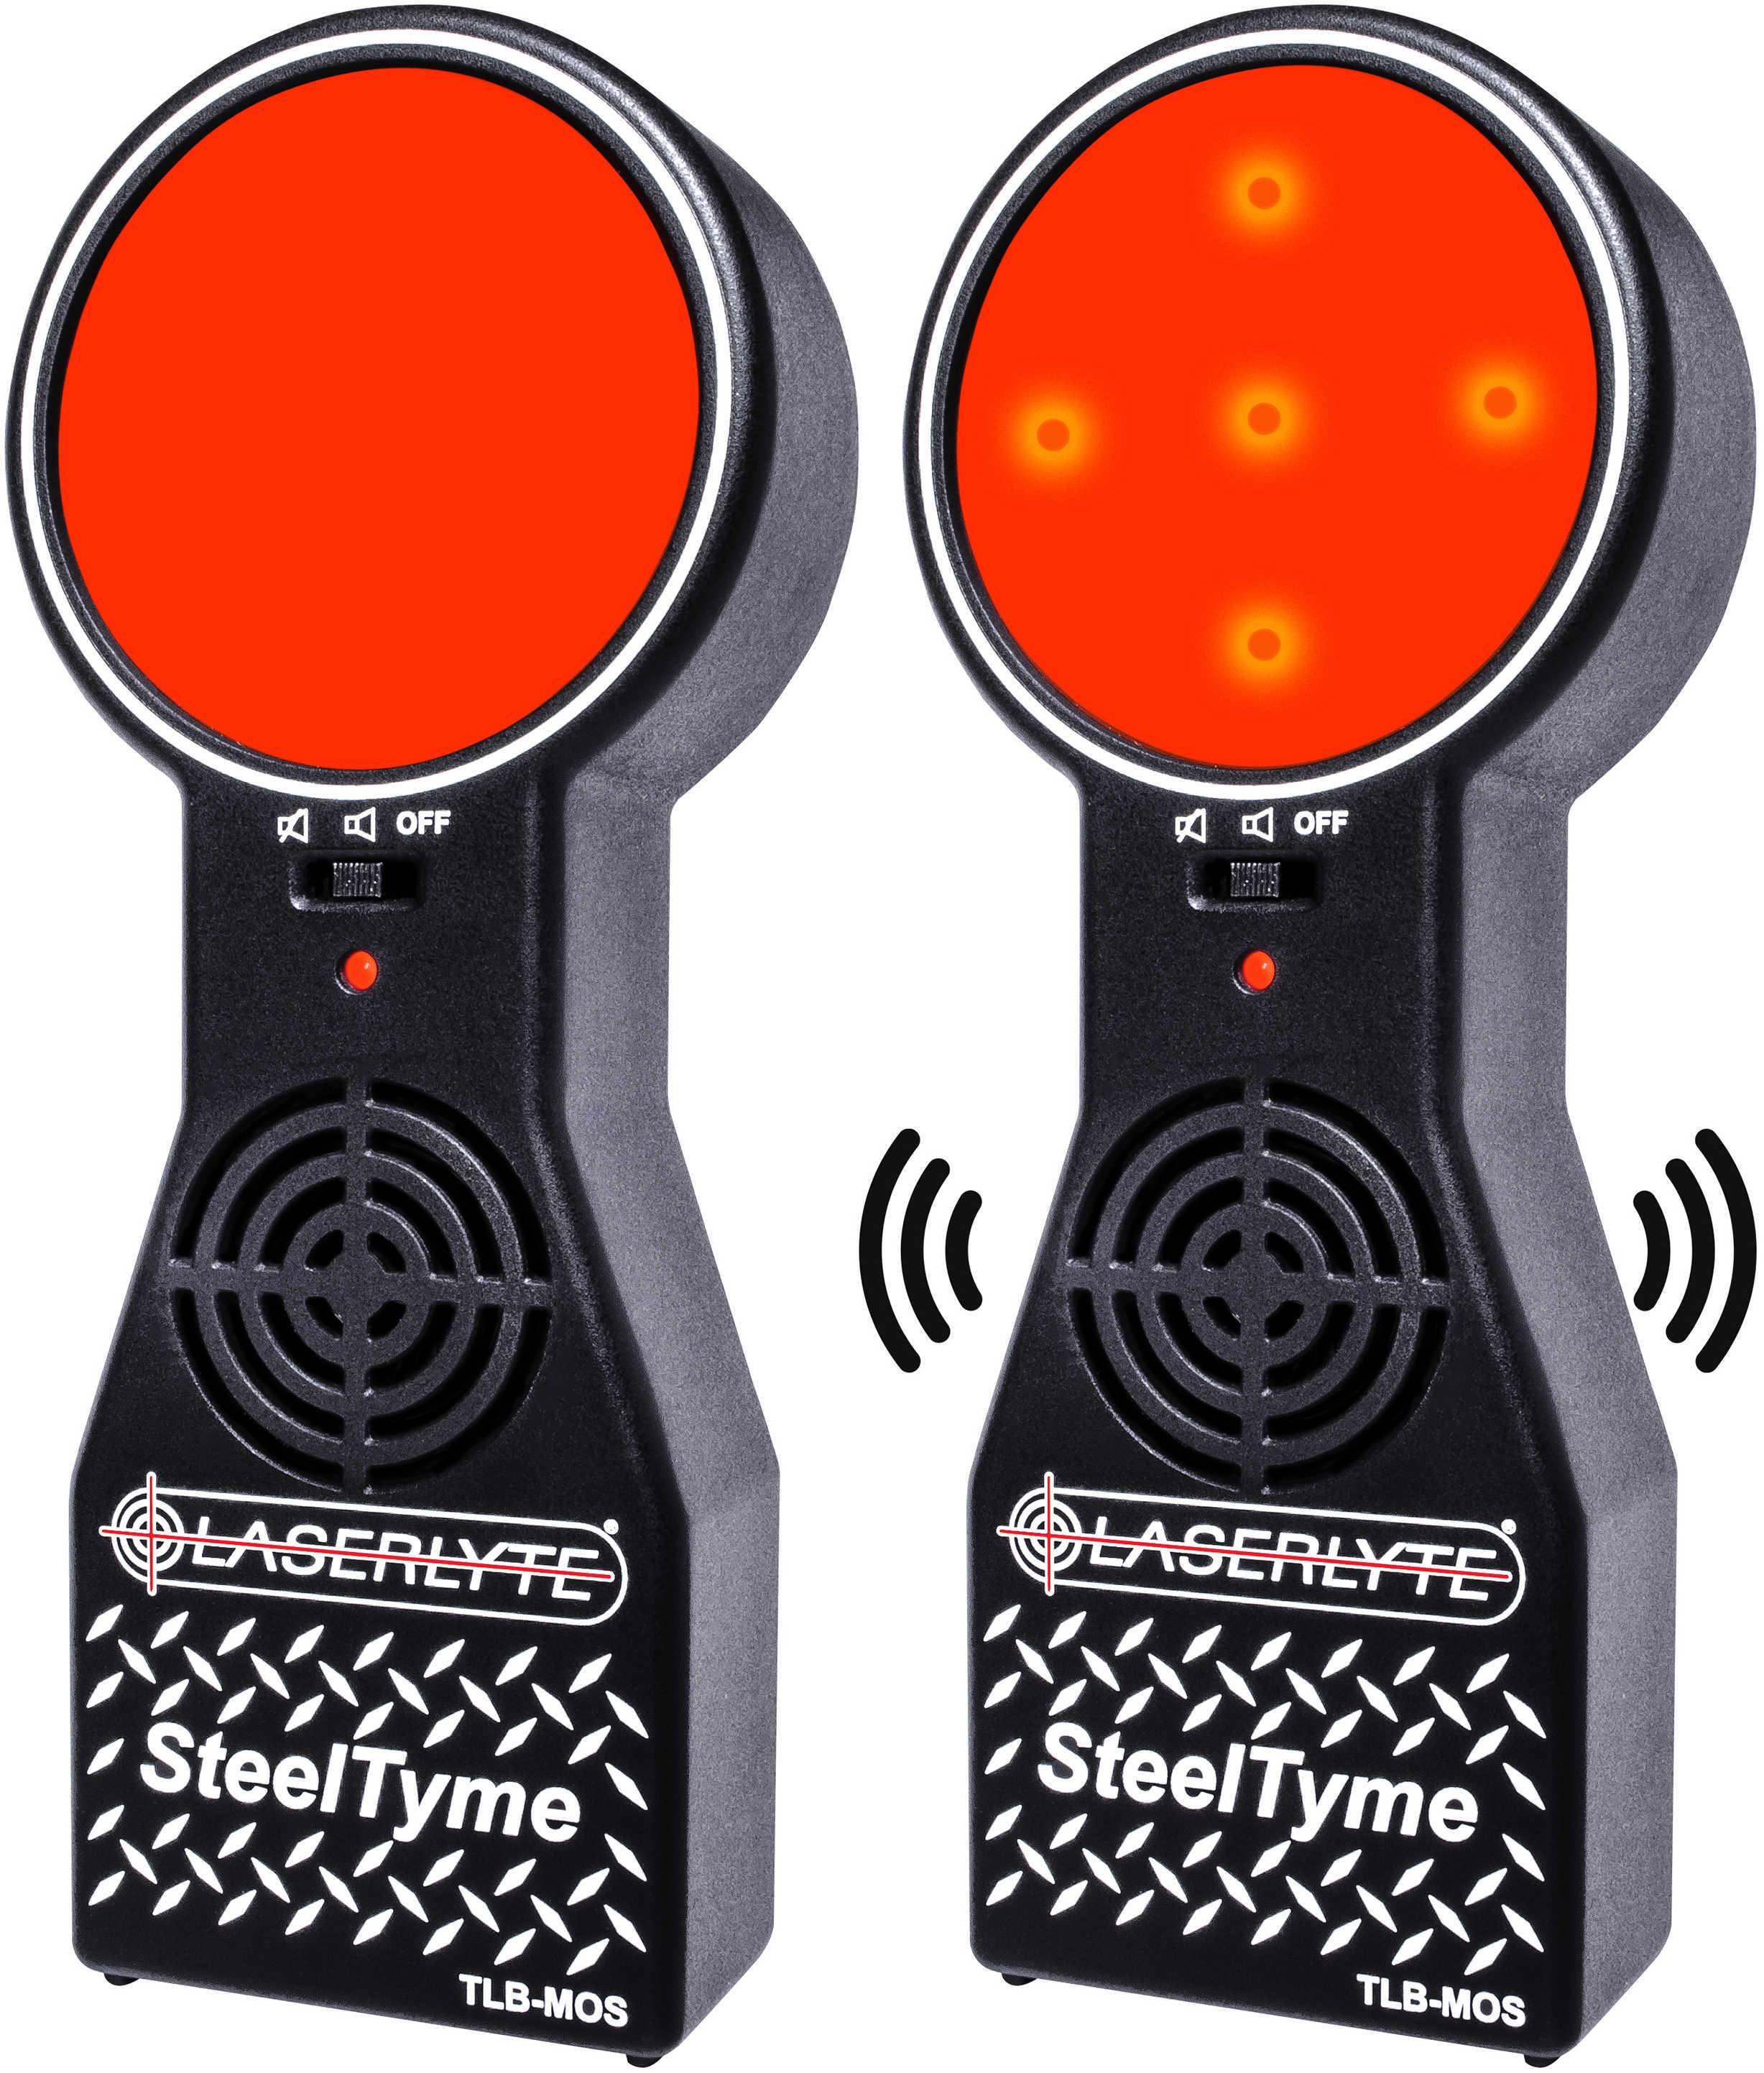 Laserlyte Steel Tyme Laser Trainer Targets 2/ct